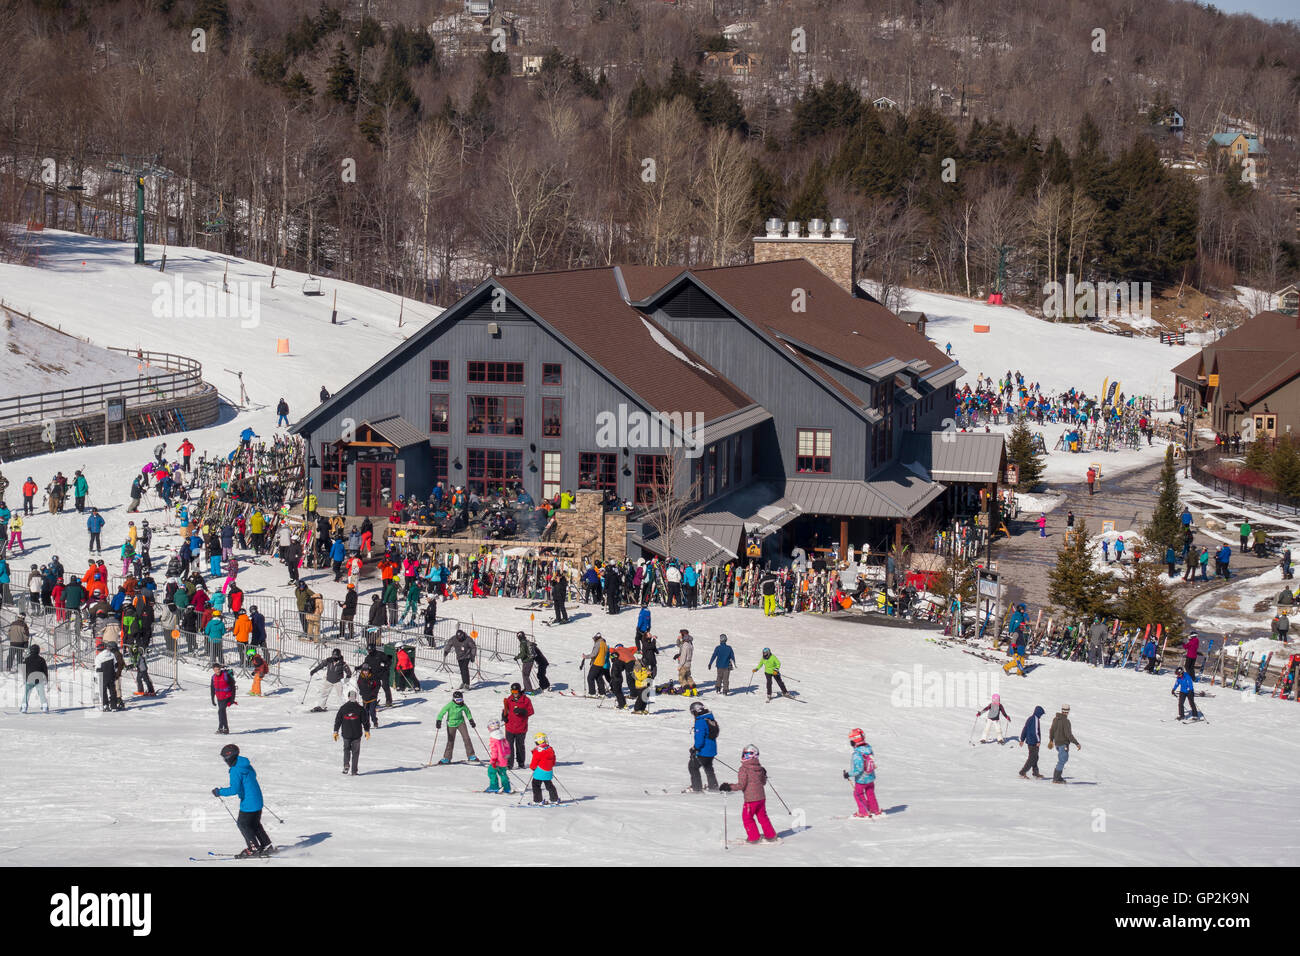 WARREN, VERMONT, USA - Crowd of skiers and lodge, Sugarbush Ski Area. Stock Photo